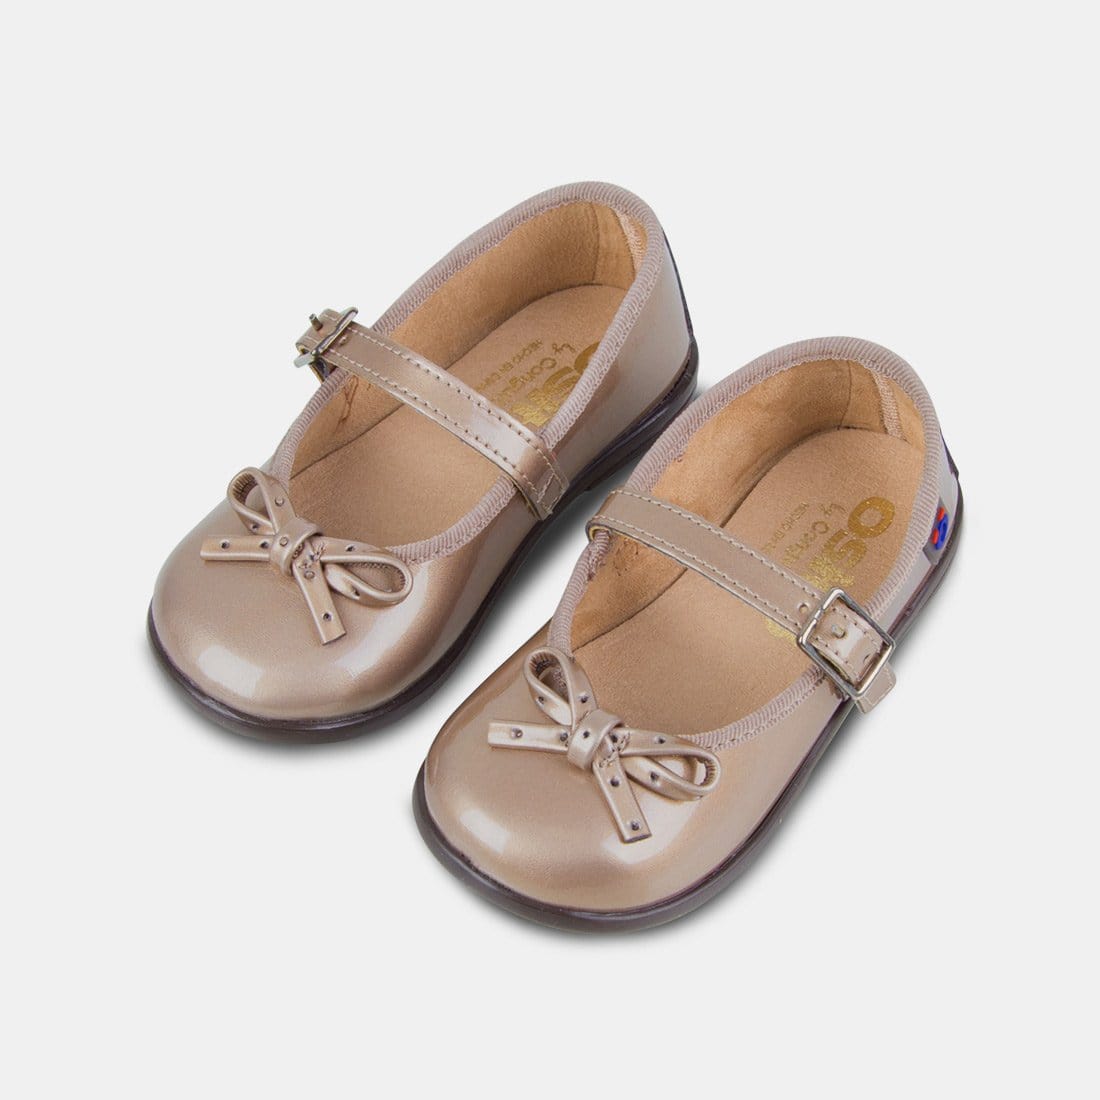 OSITO Shoes Merceditas de Bebé Charol Taupe